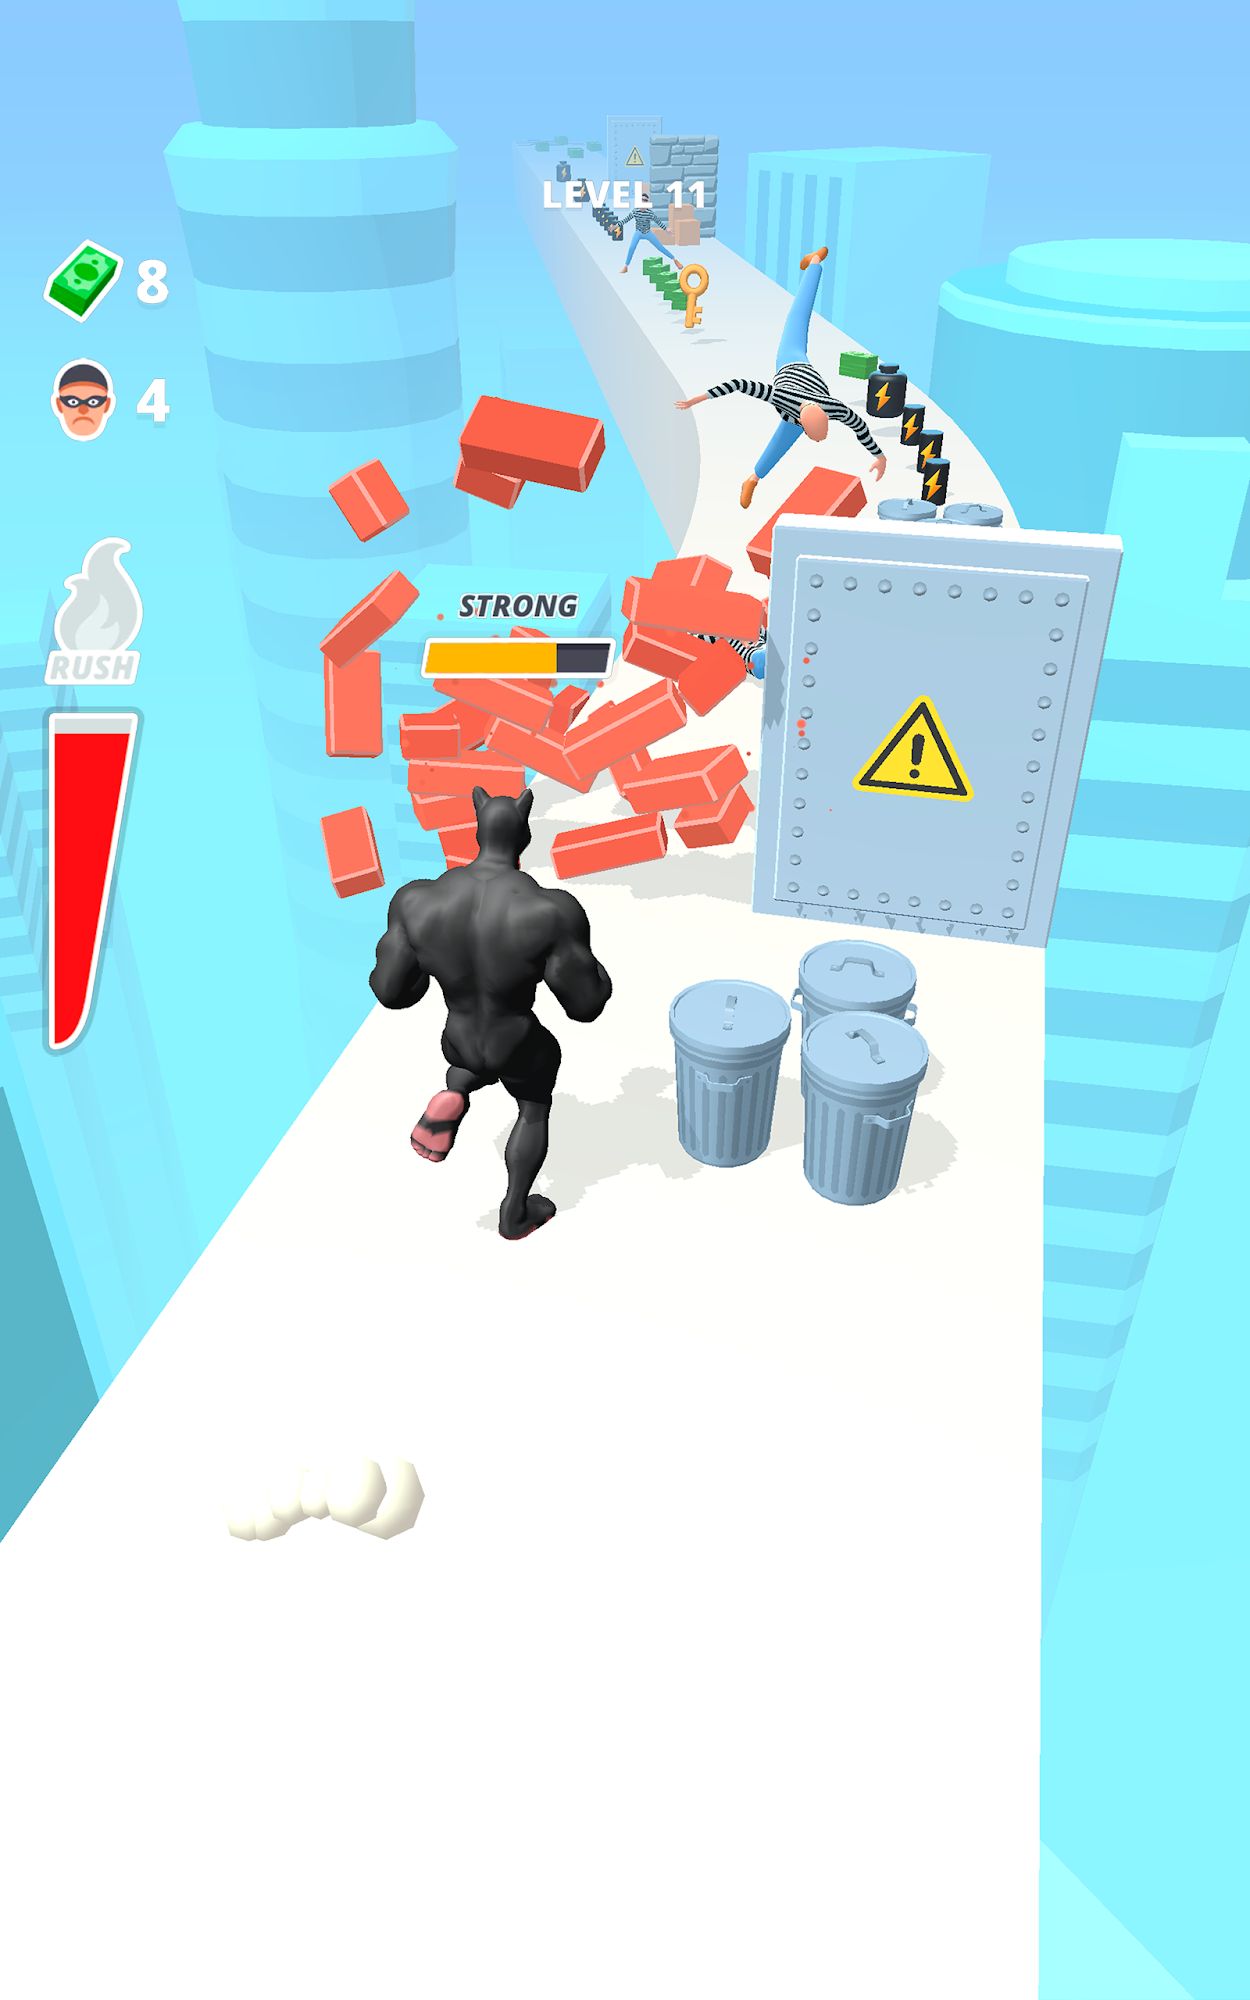 Muscle Rush - Smash Running - Android game screenshots.